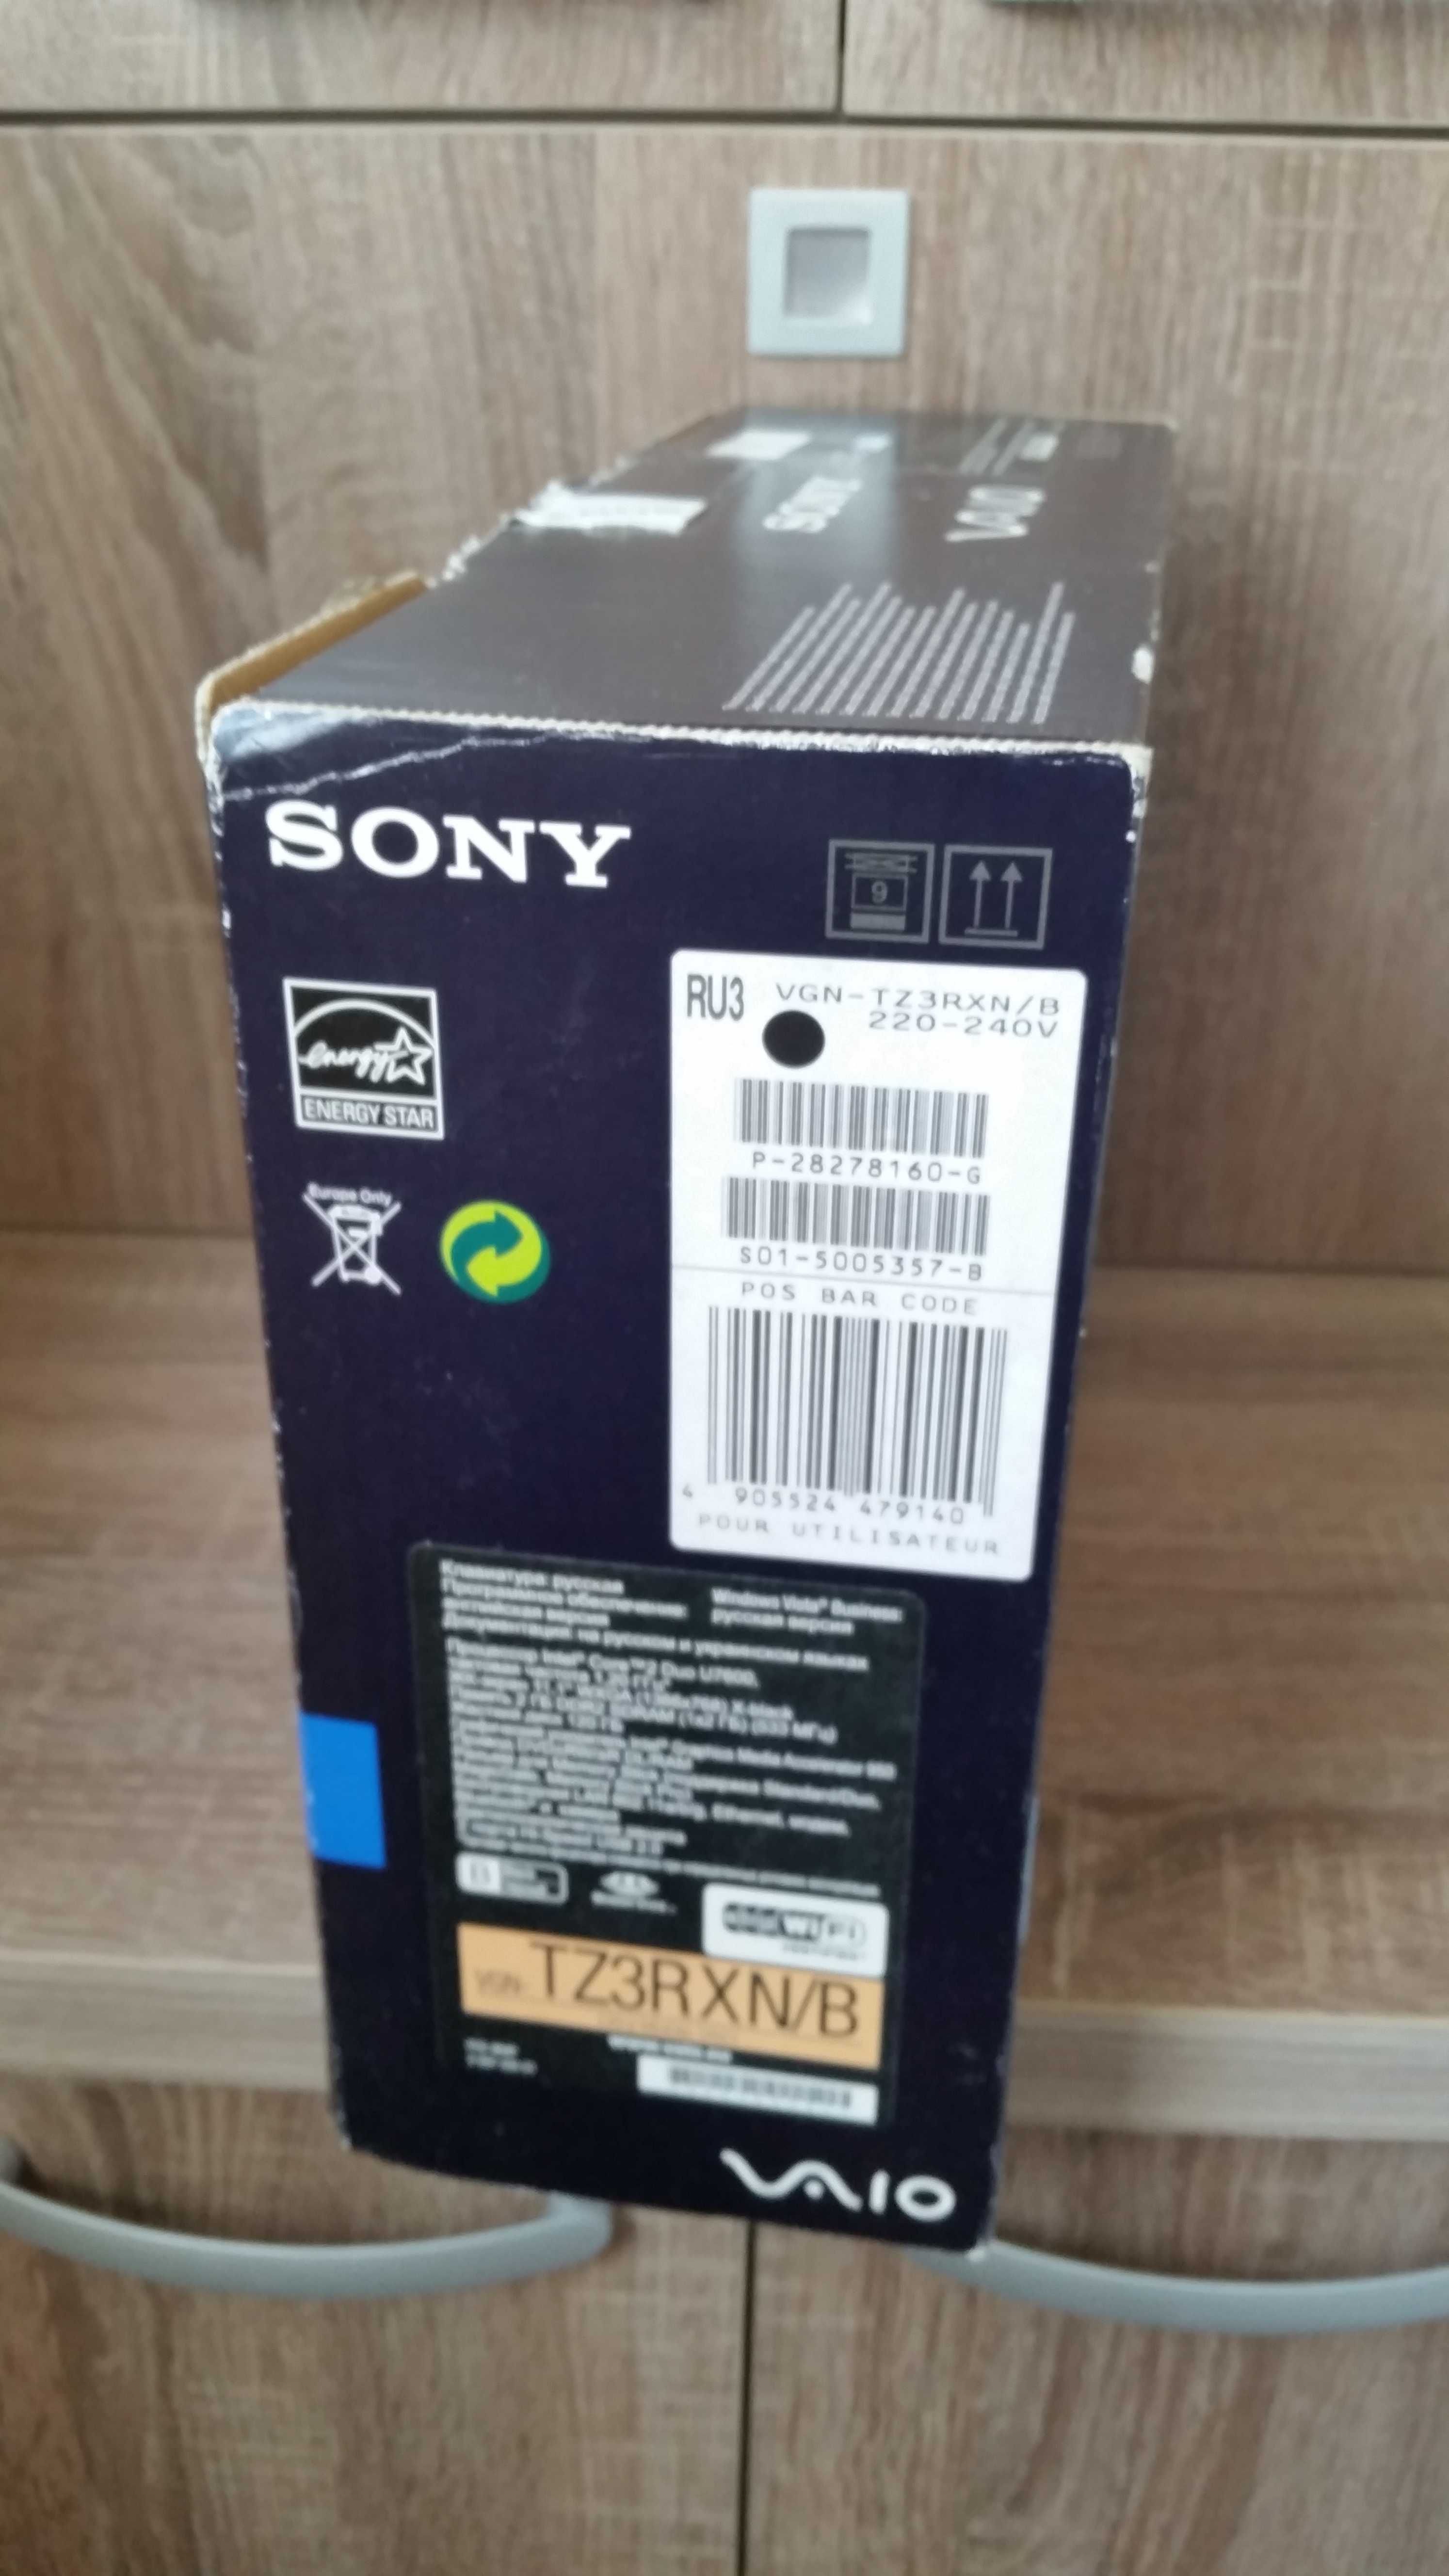 ноутбук Sony Vaio VGN-TZ3RXN/B + мышка